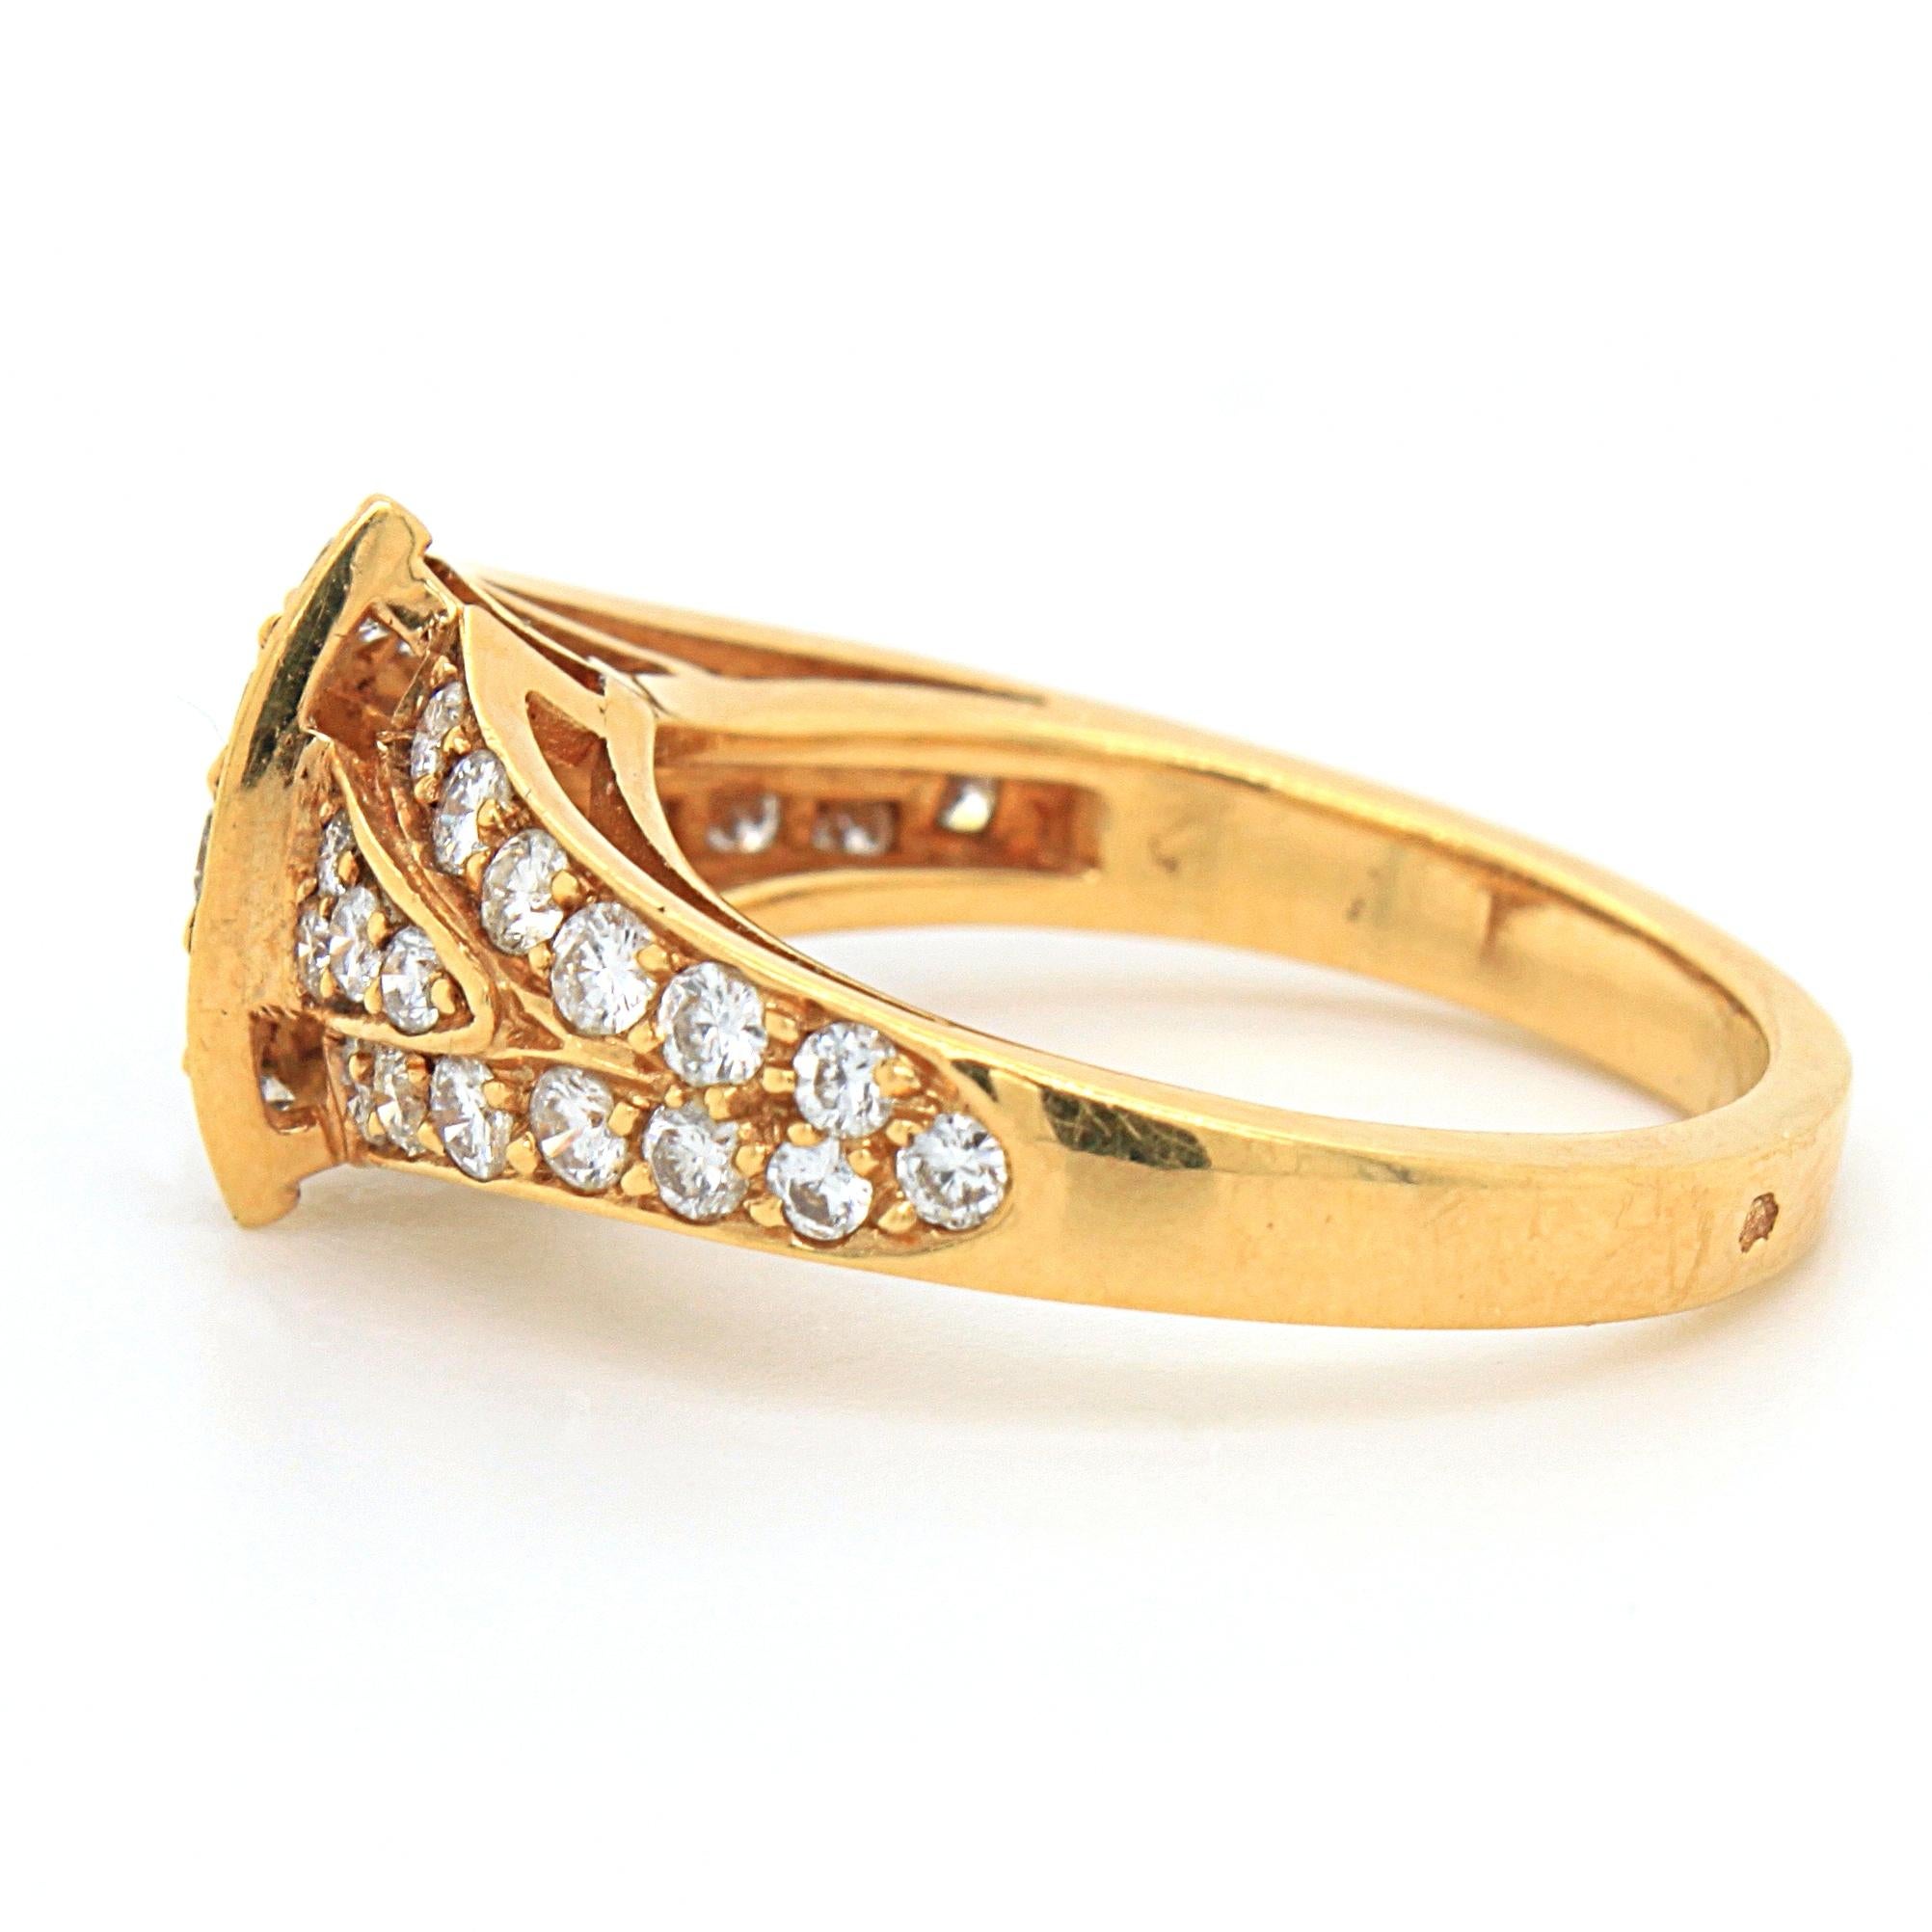 Women's Geometric Diamond Ring in 18k Yellow Gold, by Chaumet, 20th Century